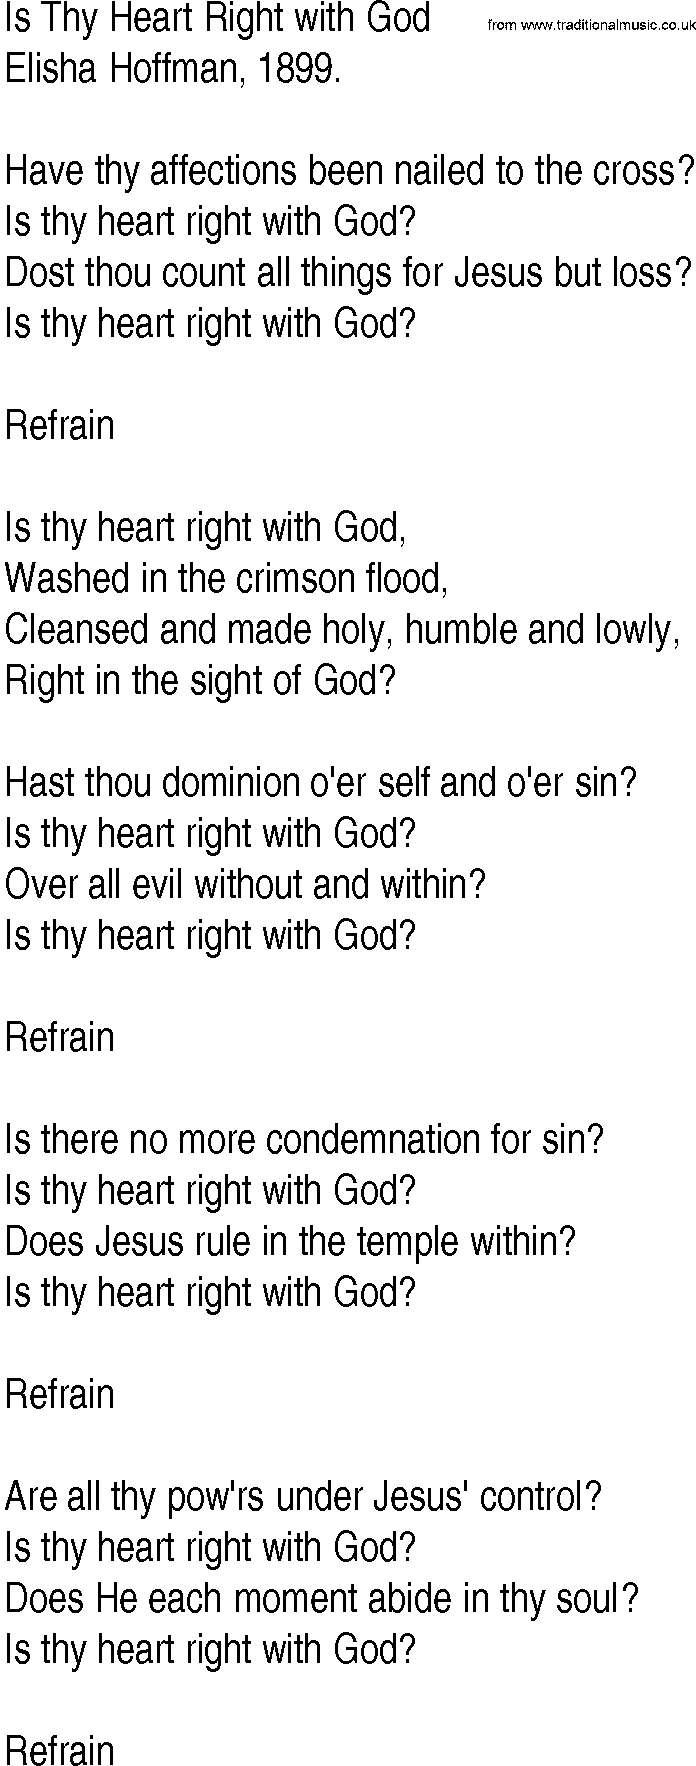 Hymn and Gospel Song: Is Thy Heart Right with God by Elisha Hoffman lyrics